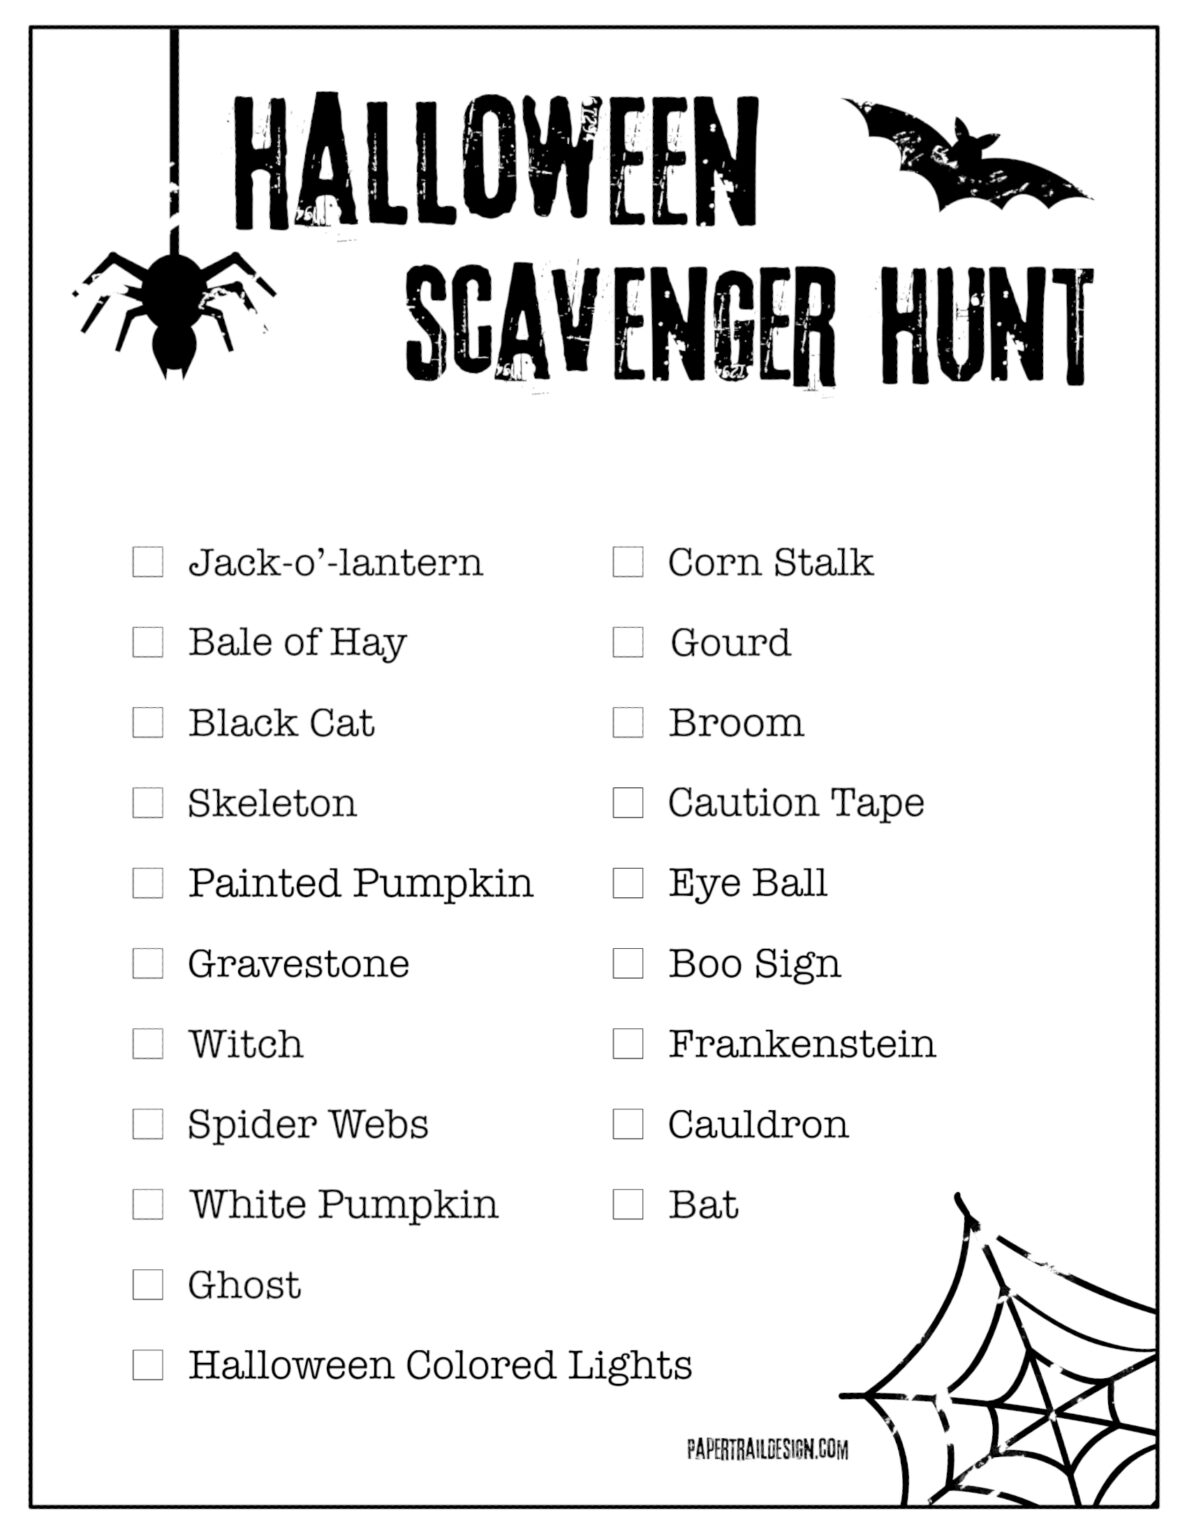 Free Printable Halloween Scavenger Hunt List